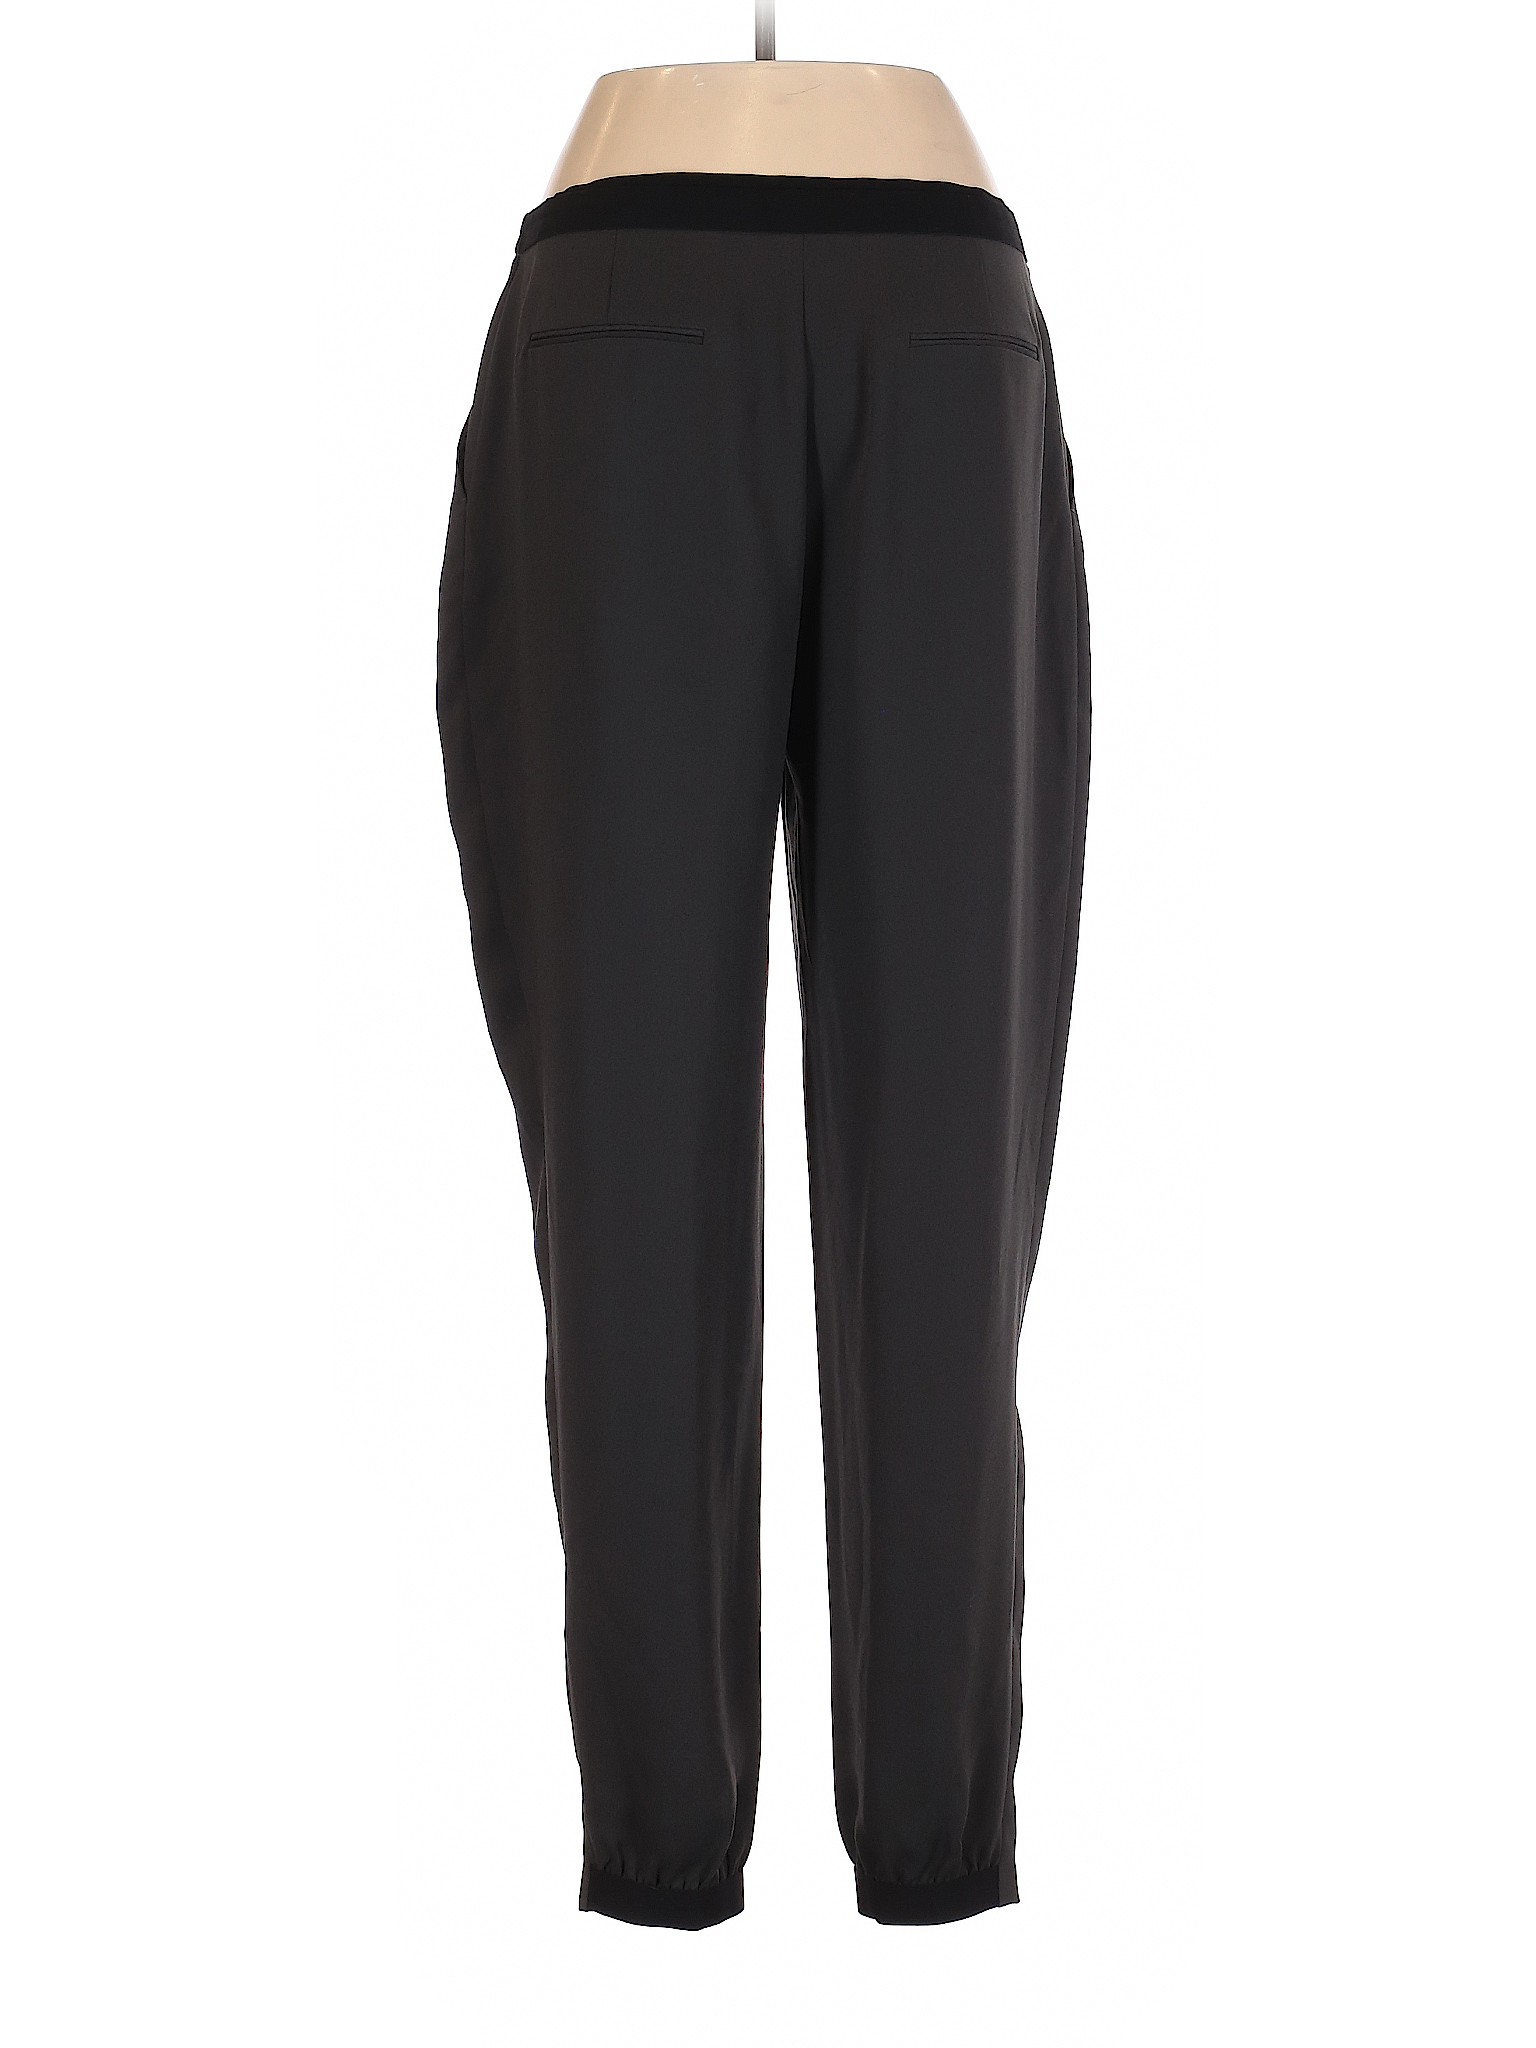 Tahari Women Black Dress Pants 10 | eBay